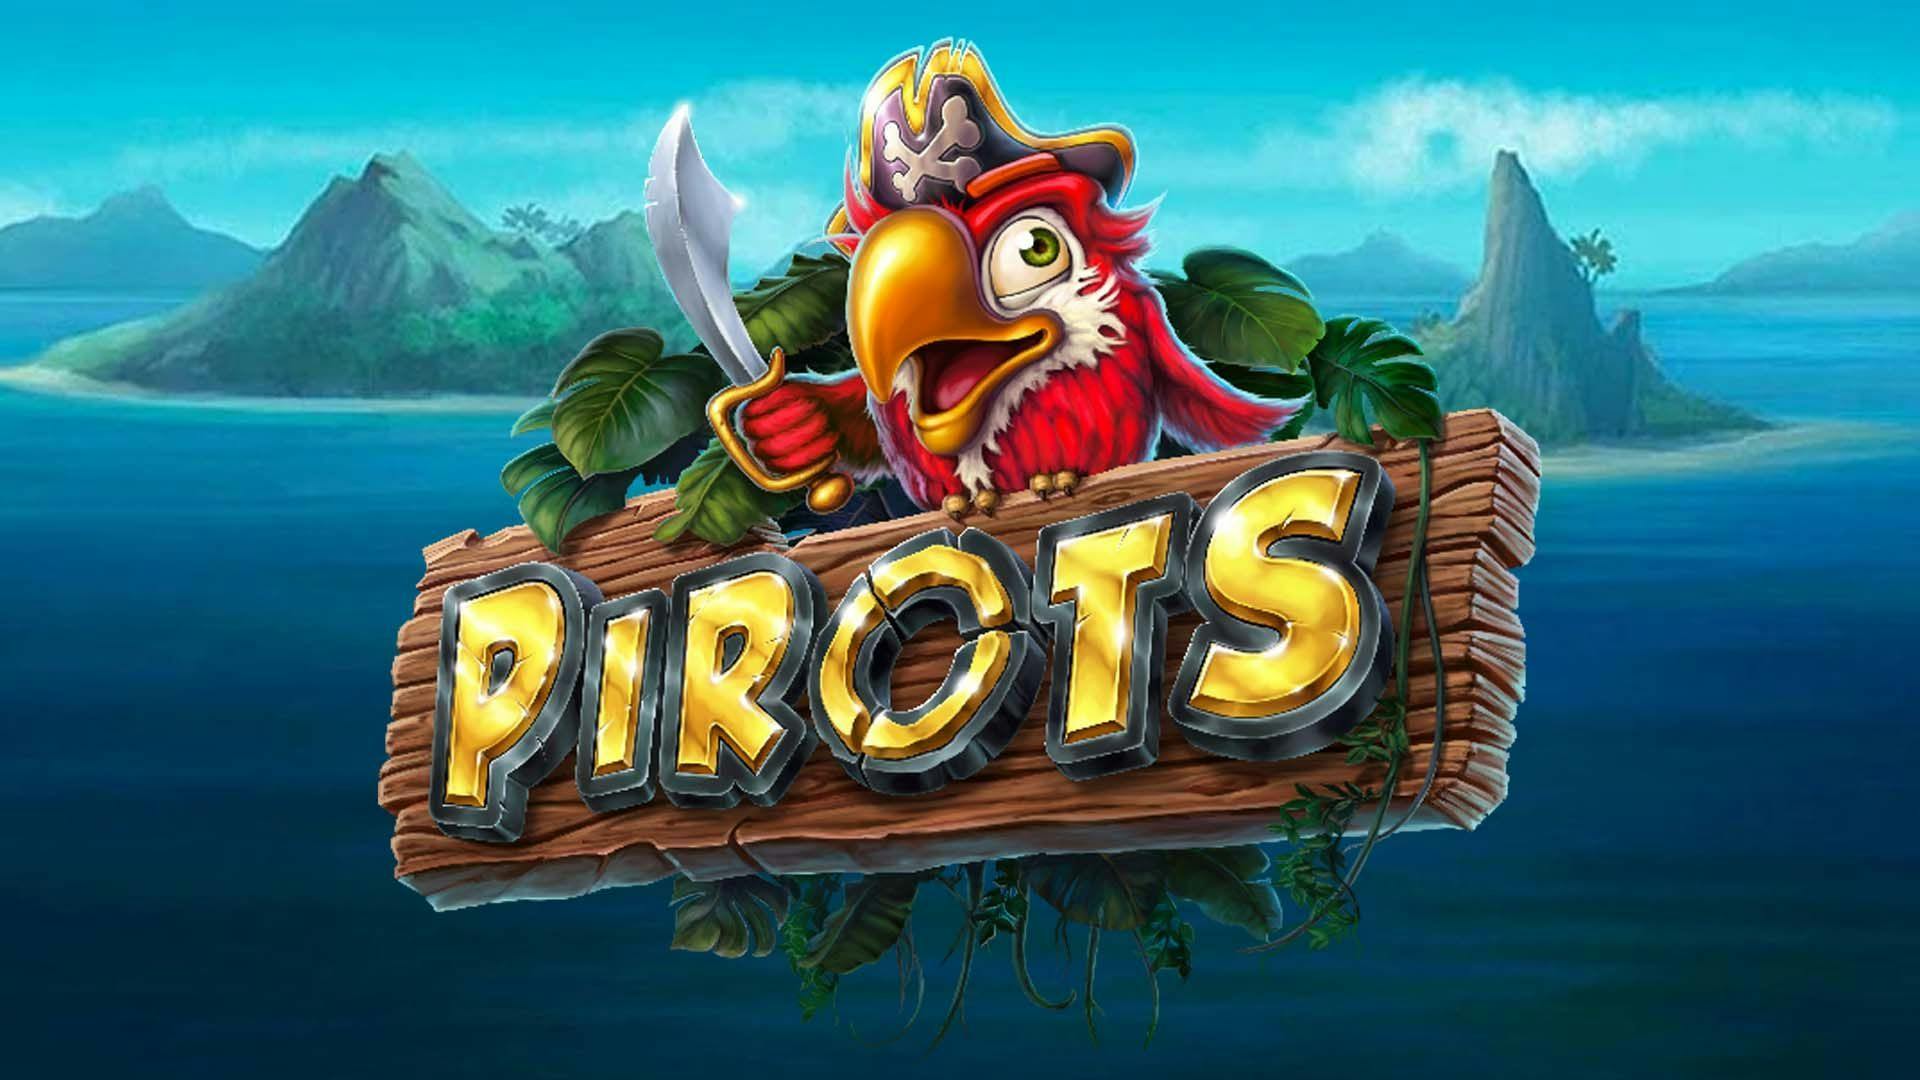 Pirots Slot Machine Online Free Game Play